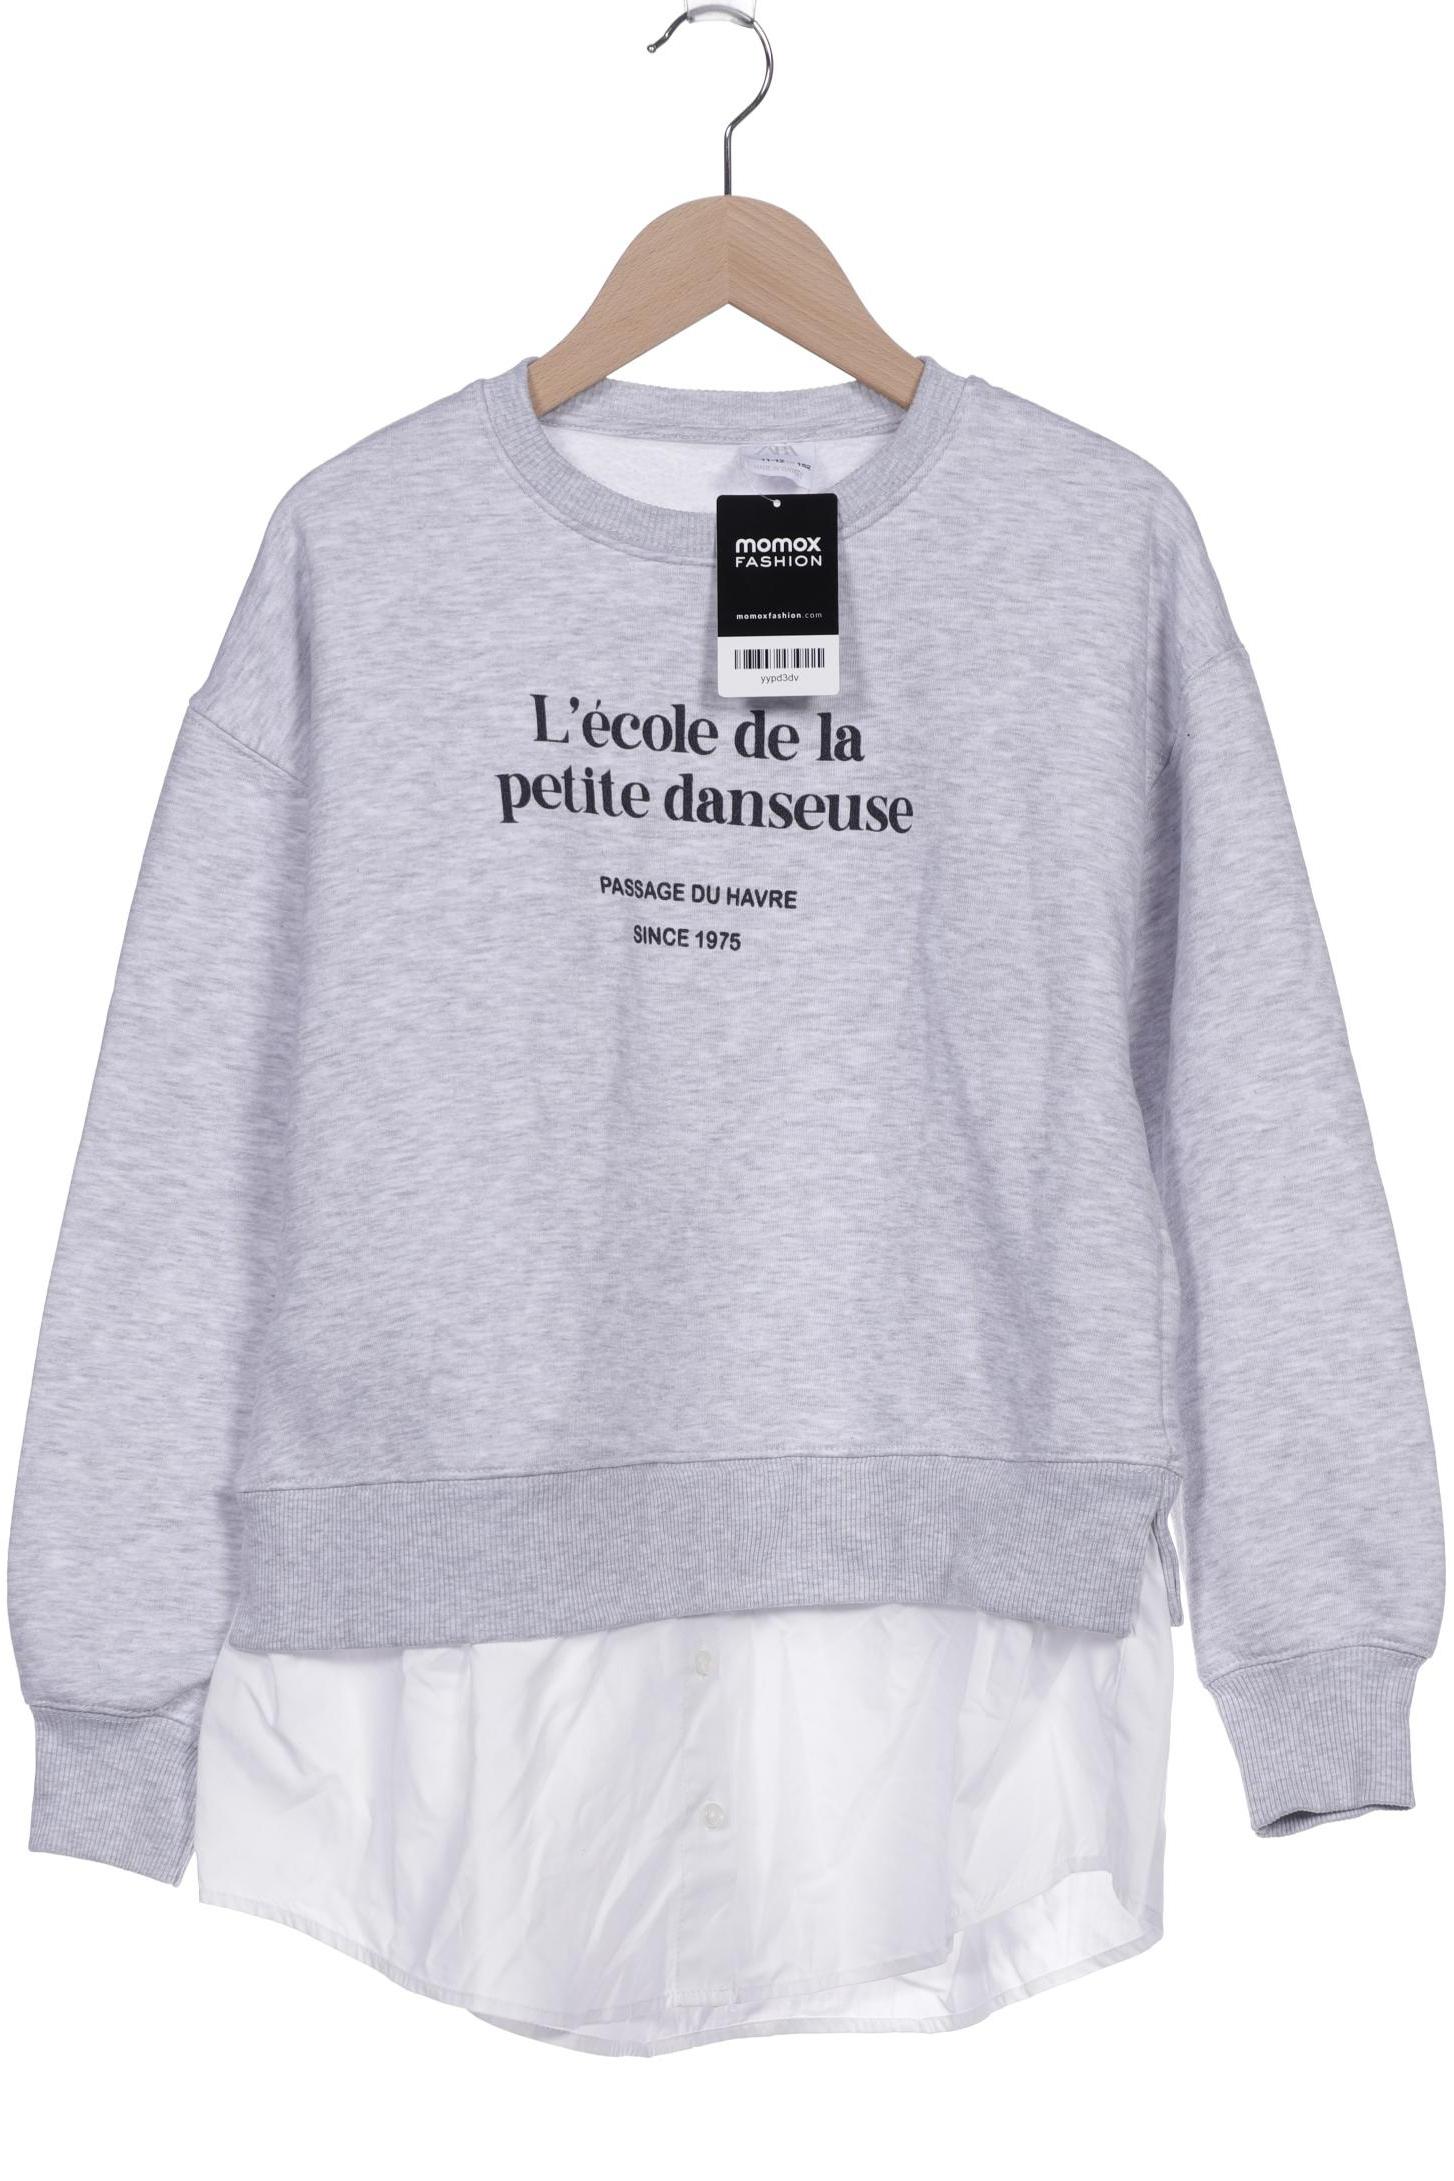 Zara Damen Hoodies & Sweater, grau, Gr. 152 von ZARA